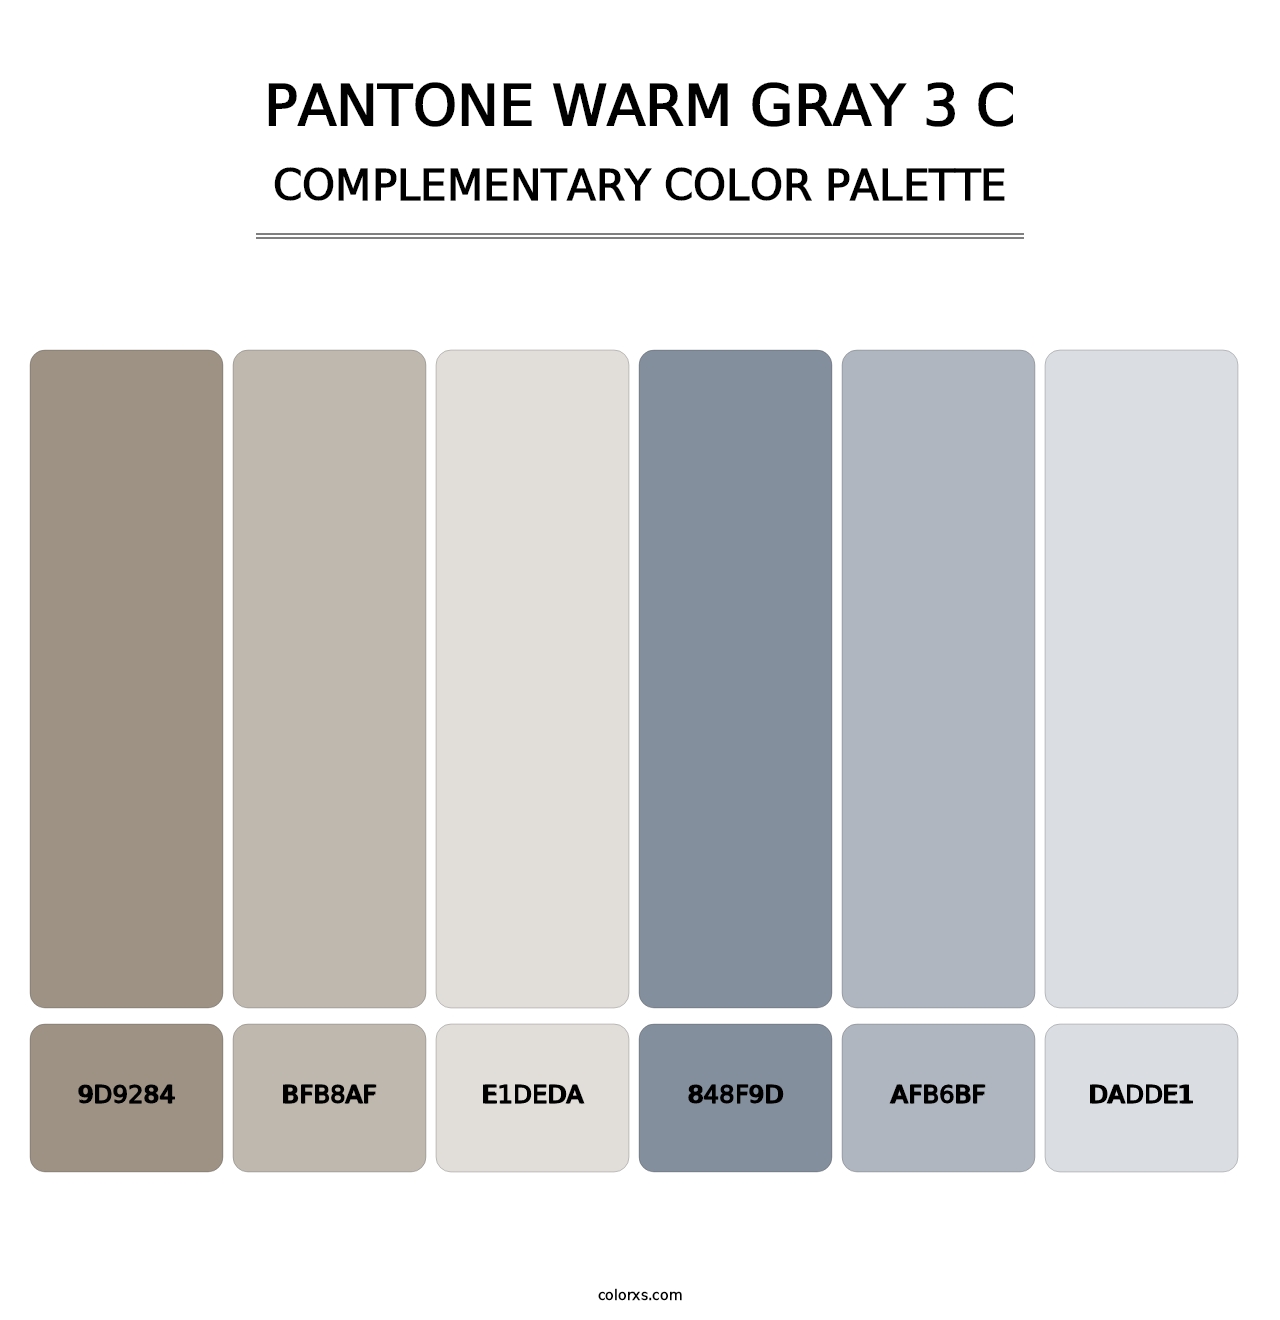 PANTONE Warm Gray 3 C - Complementary Color Palette